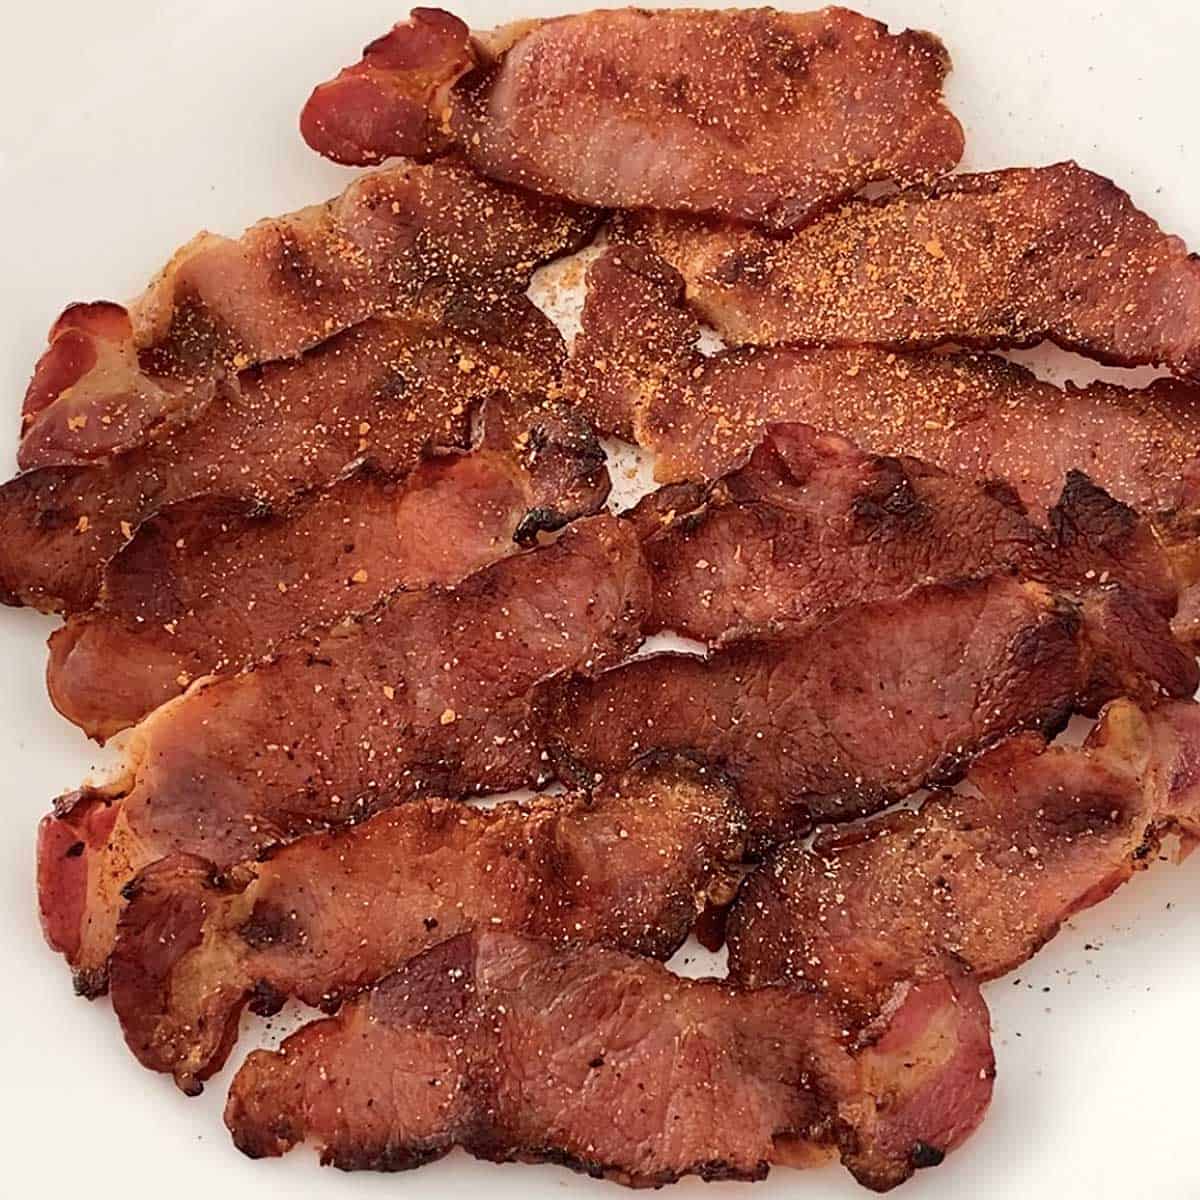 https://bensabaconlovers.com/wp-content/uploads/2023/01/fried-back-bacon.jpg